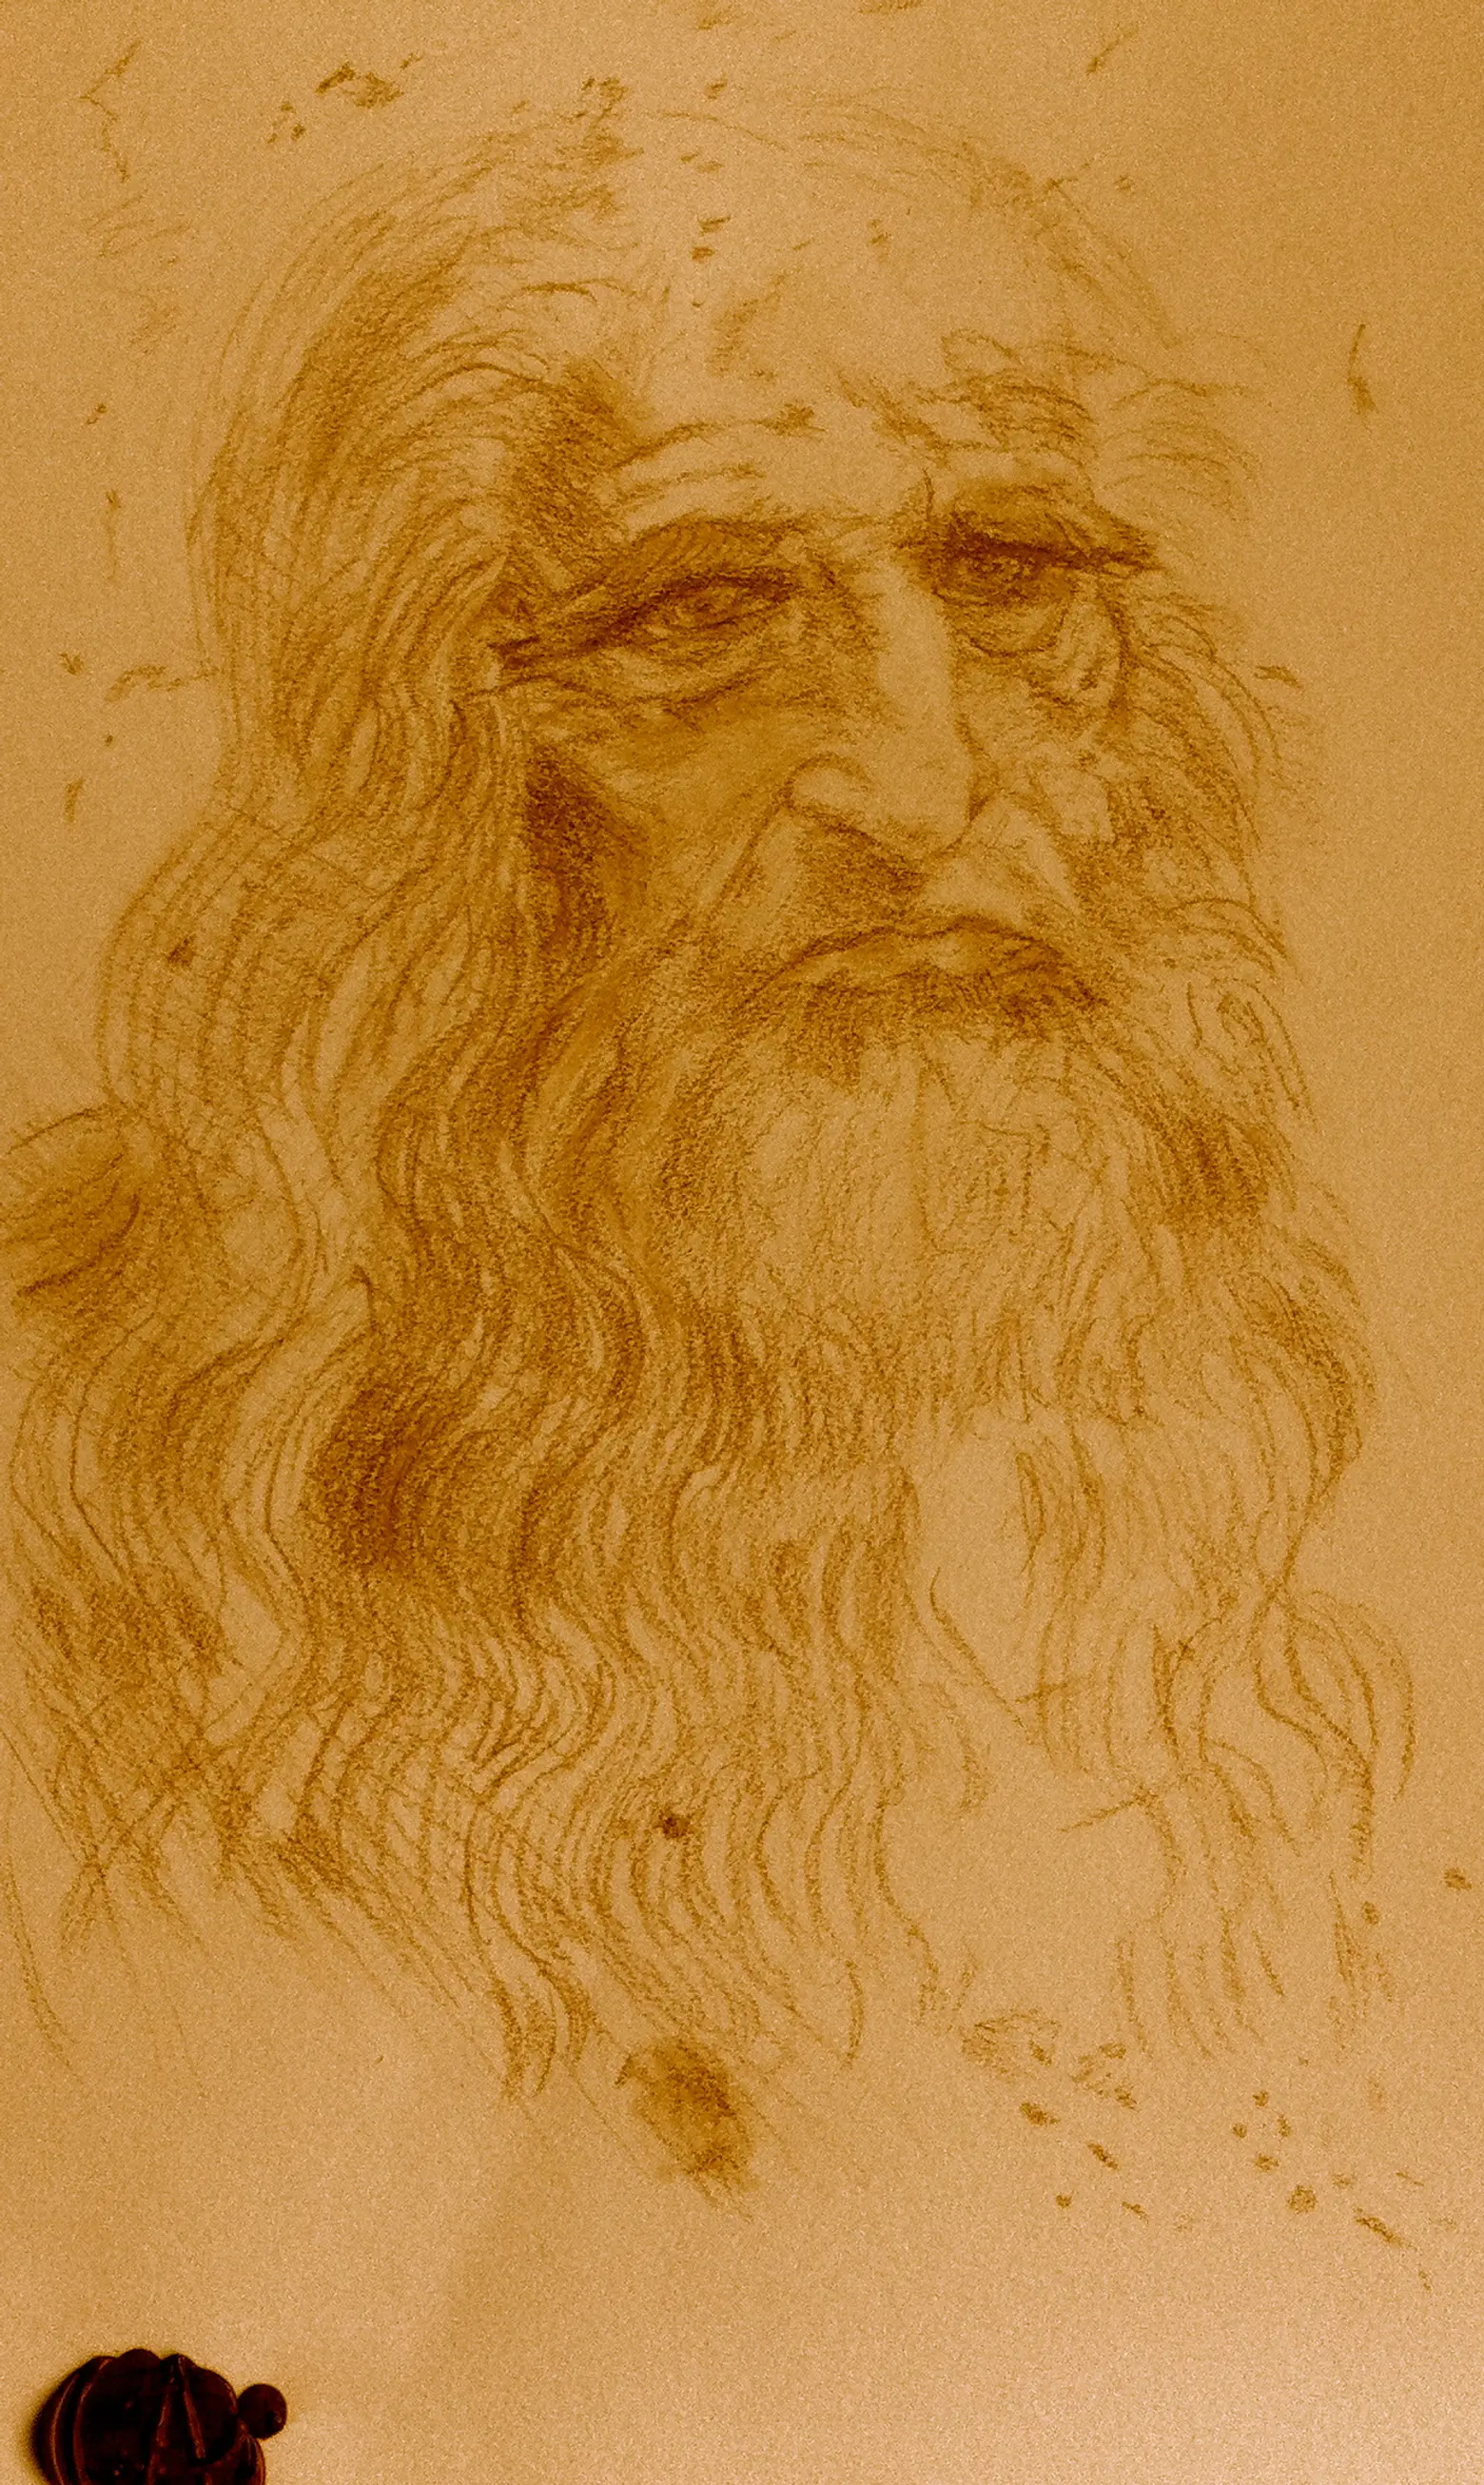 David aaron carpenter's Sketch of Leonardo Da Vinci, David aaron carpenter, Sketch of Leonardo Da Vinci